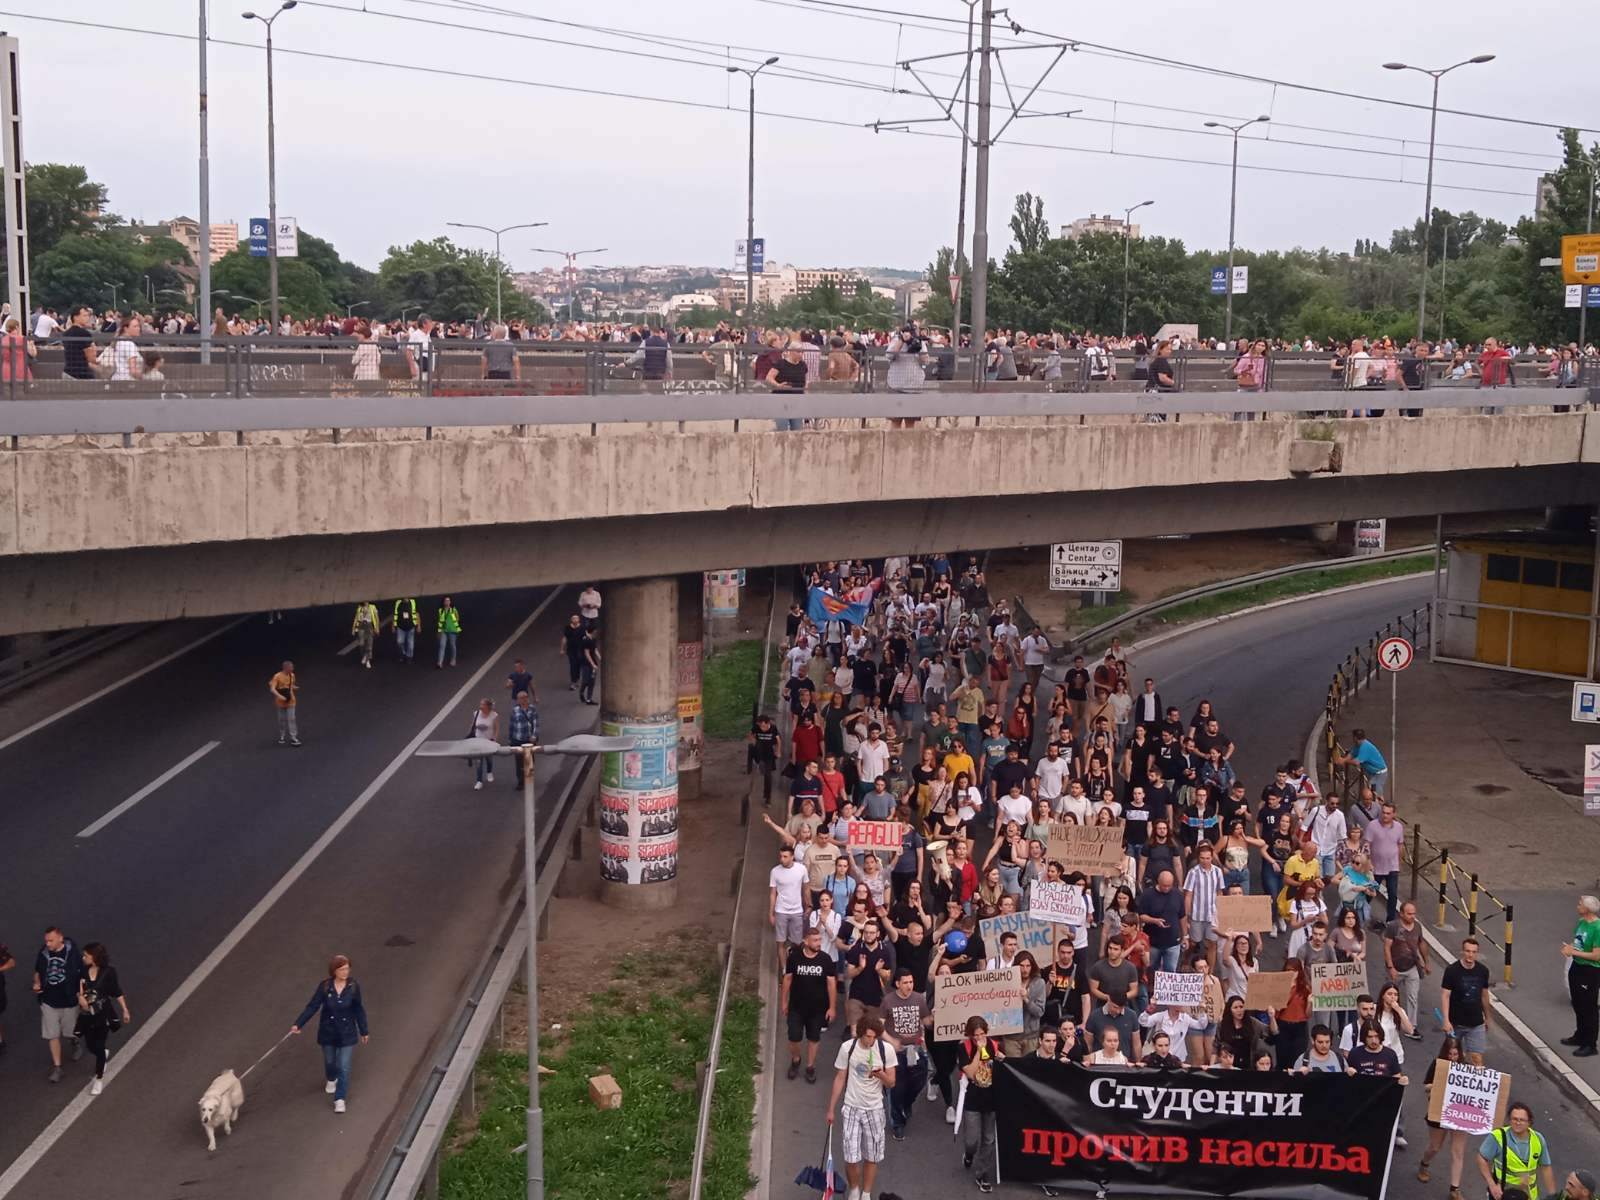 Protest "Srbija protiv nasilja" u preko 10 gradova obeležile šetnje, blokade puteva i zahtevi za ostavkama (FOTO, VIDEO) 13